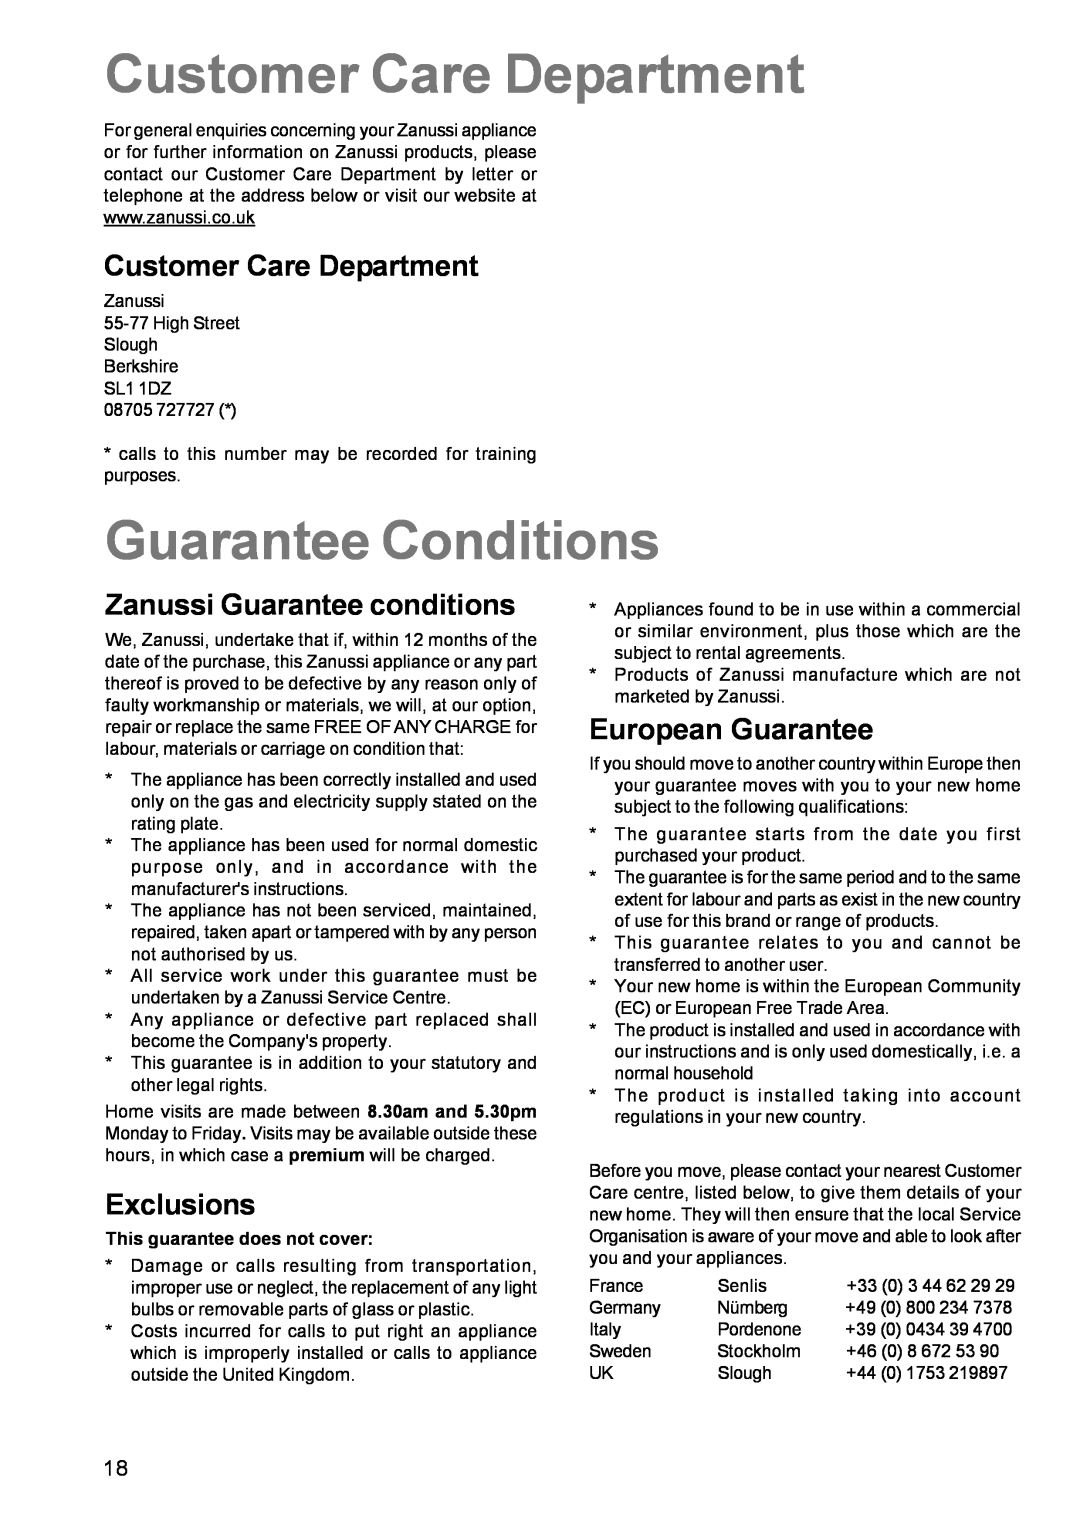 Zanussi ZCM 631 manual Customer Care Department, Guarantee Conditions, Zanussi Guarantee conditions, Exclusions 